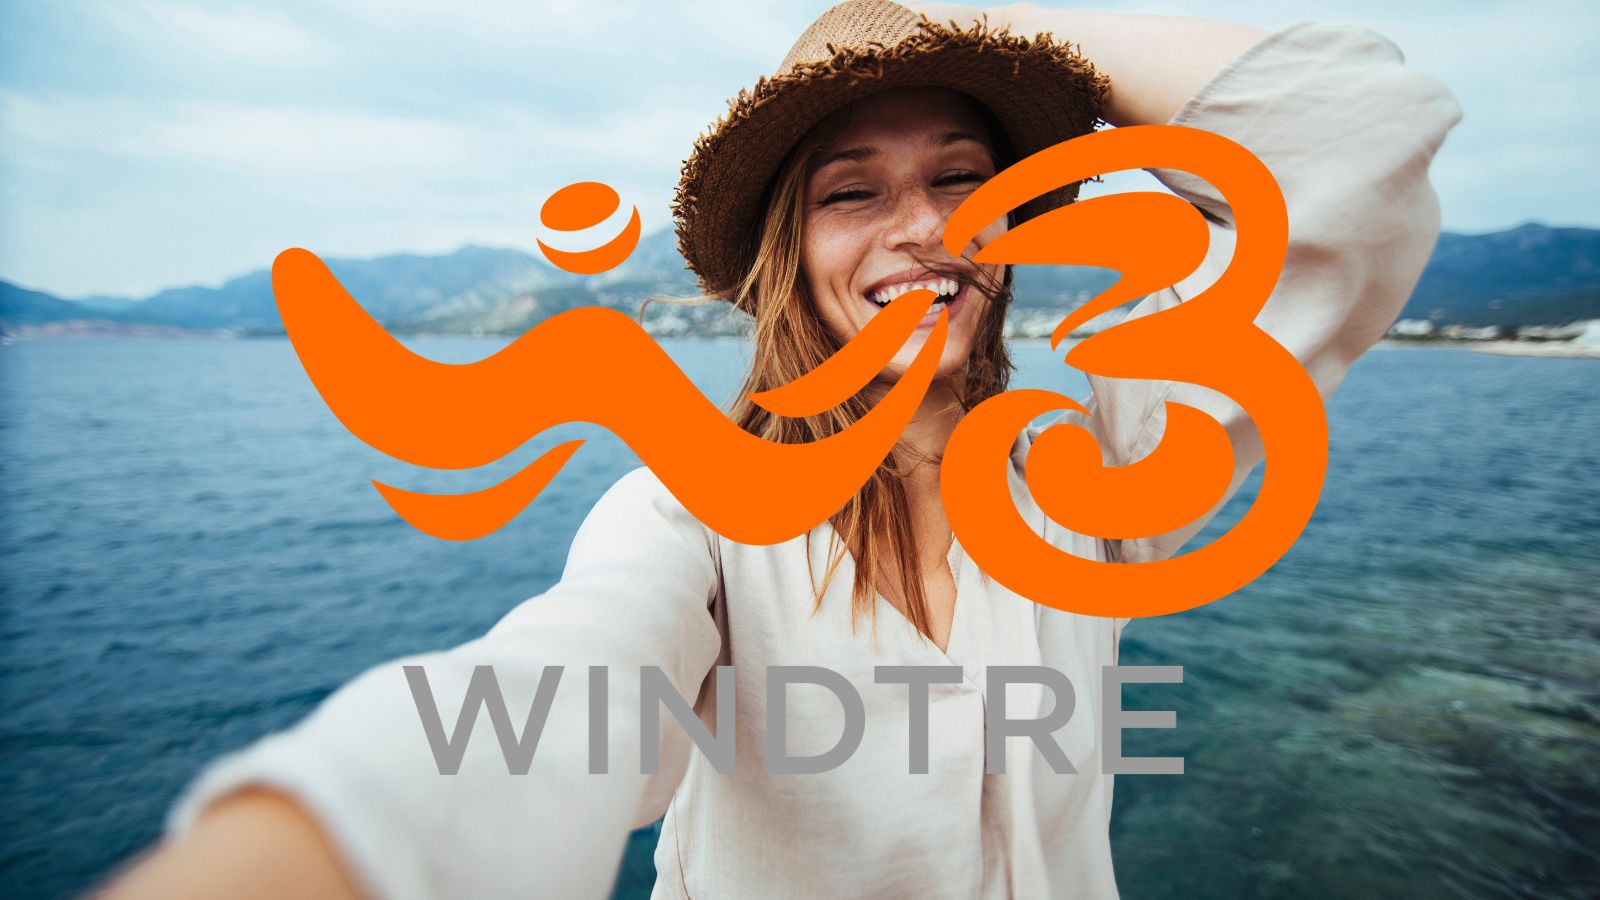 offerte WindTre